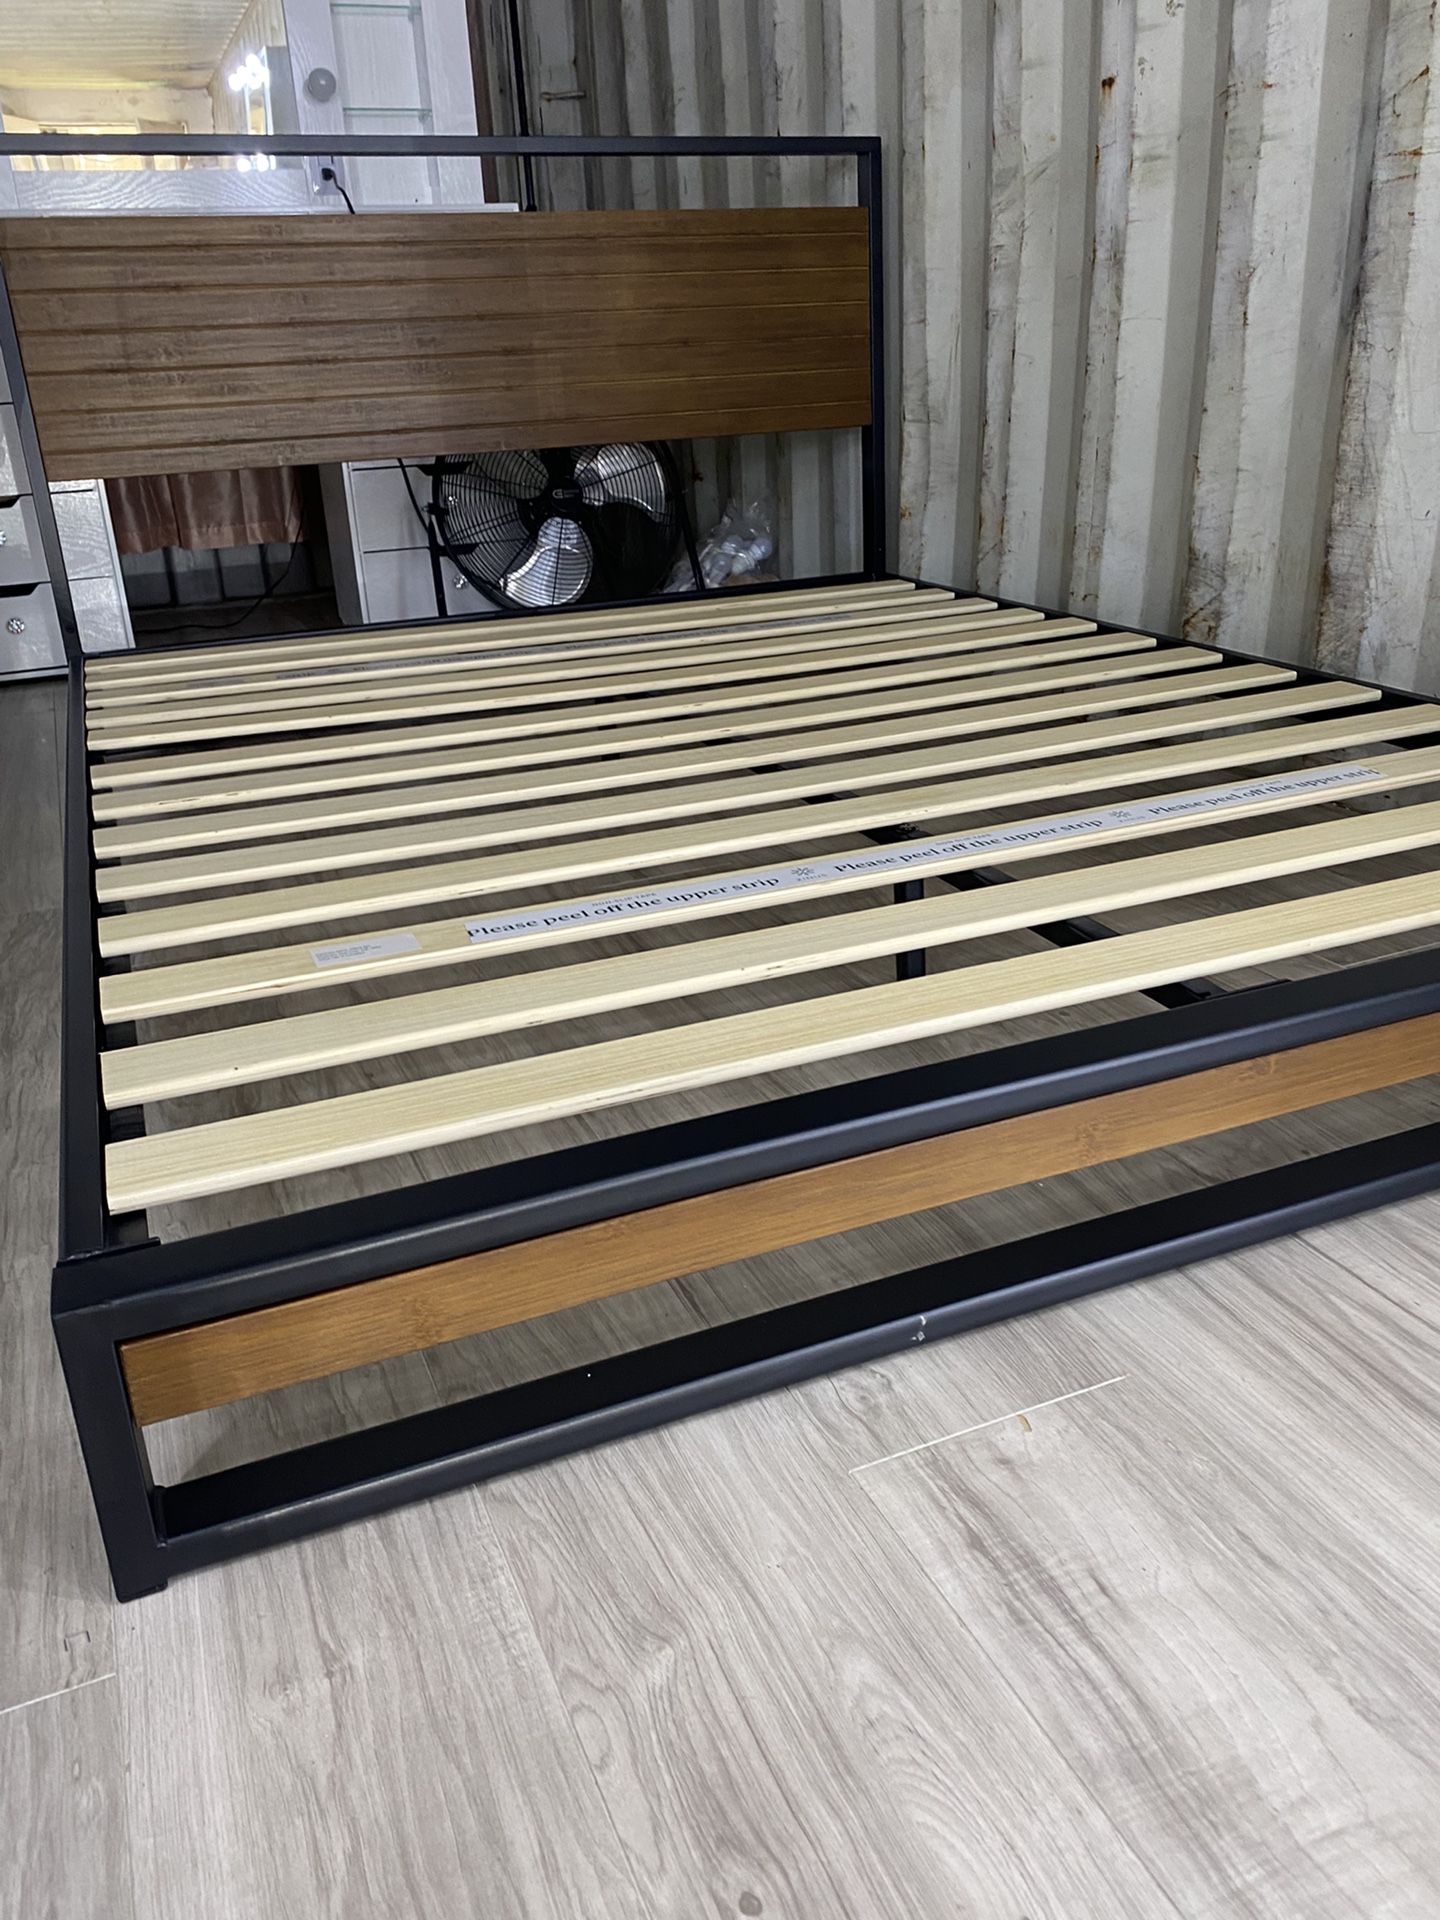 New Queen Platform Bed Frame 